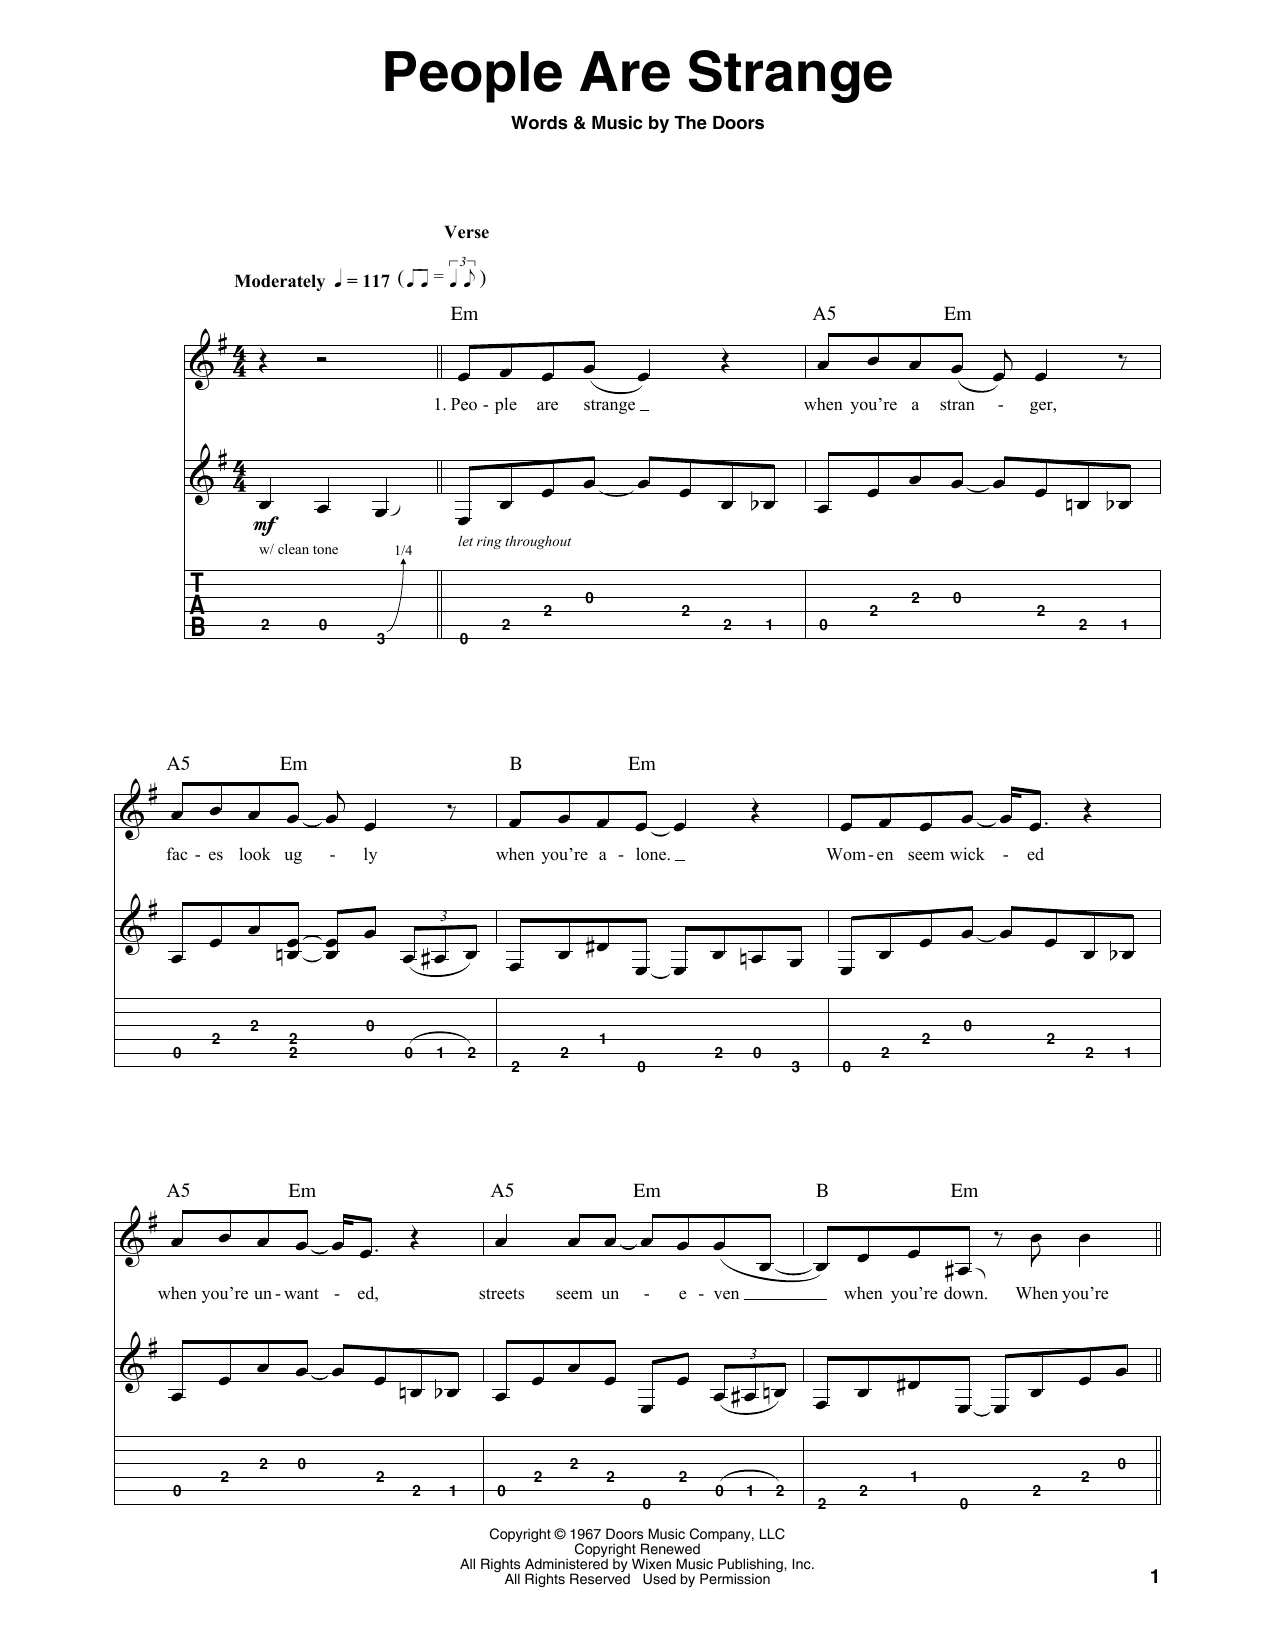 The Doors People Are Strange Sheet Music Notes & Chords for Guitar Chords/Lyrics - Download or Print PDF